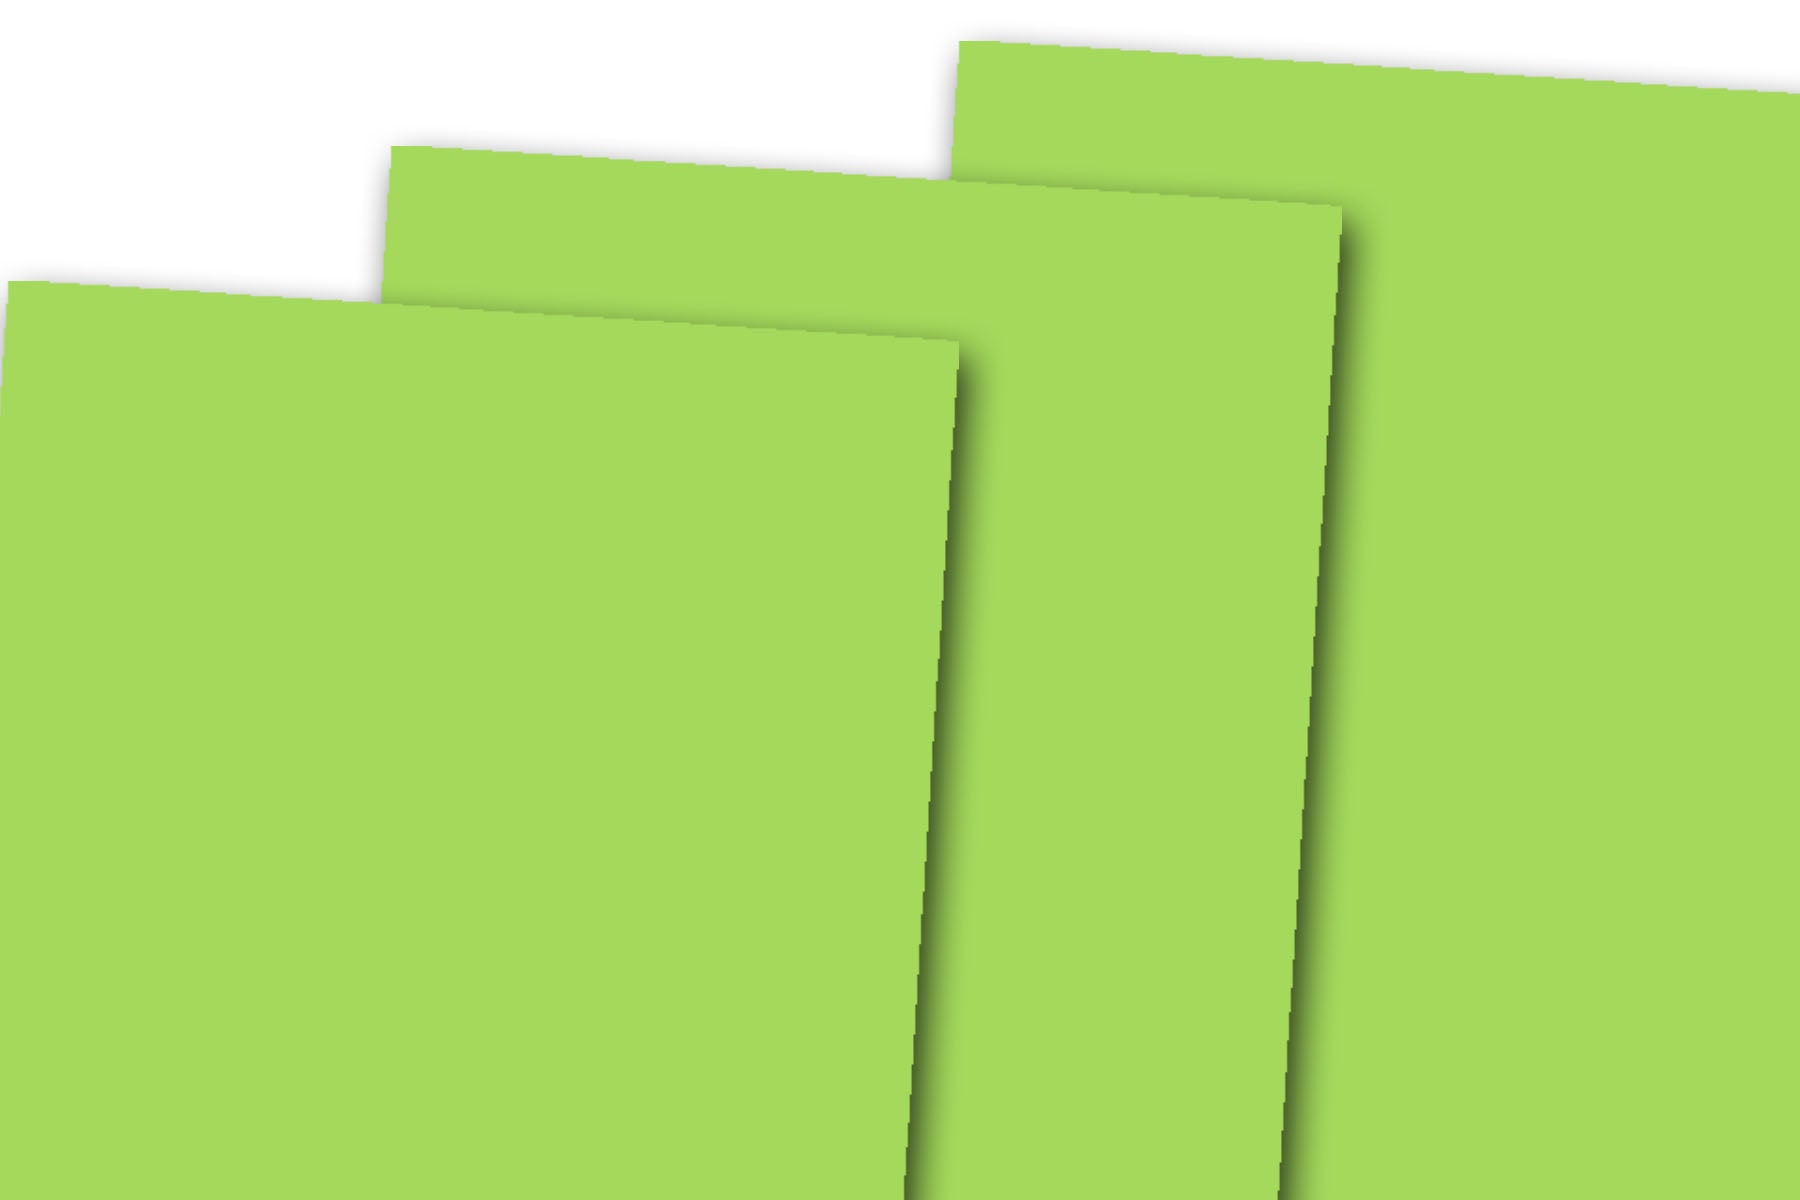 Astrobrights Color Paper - Green